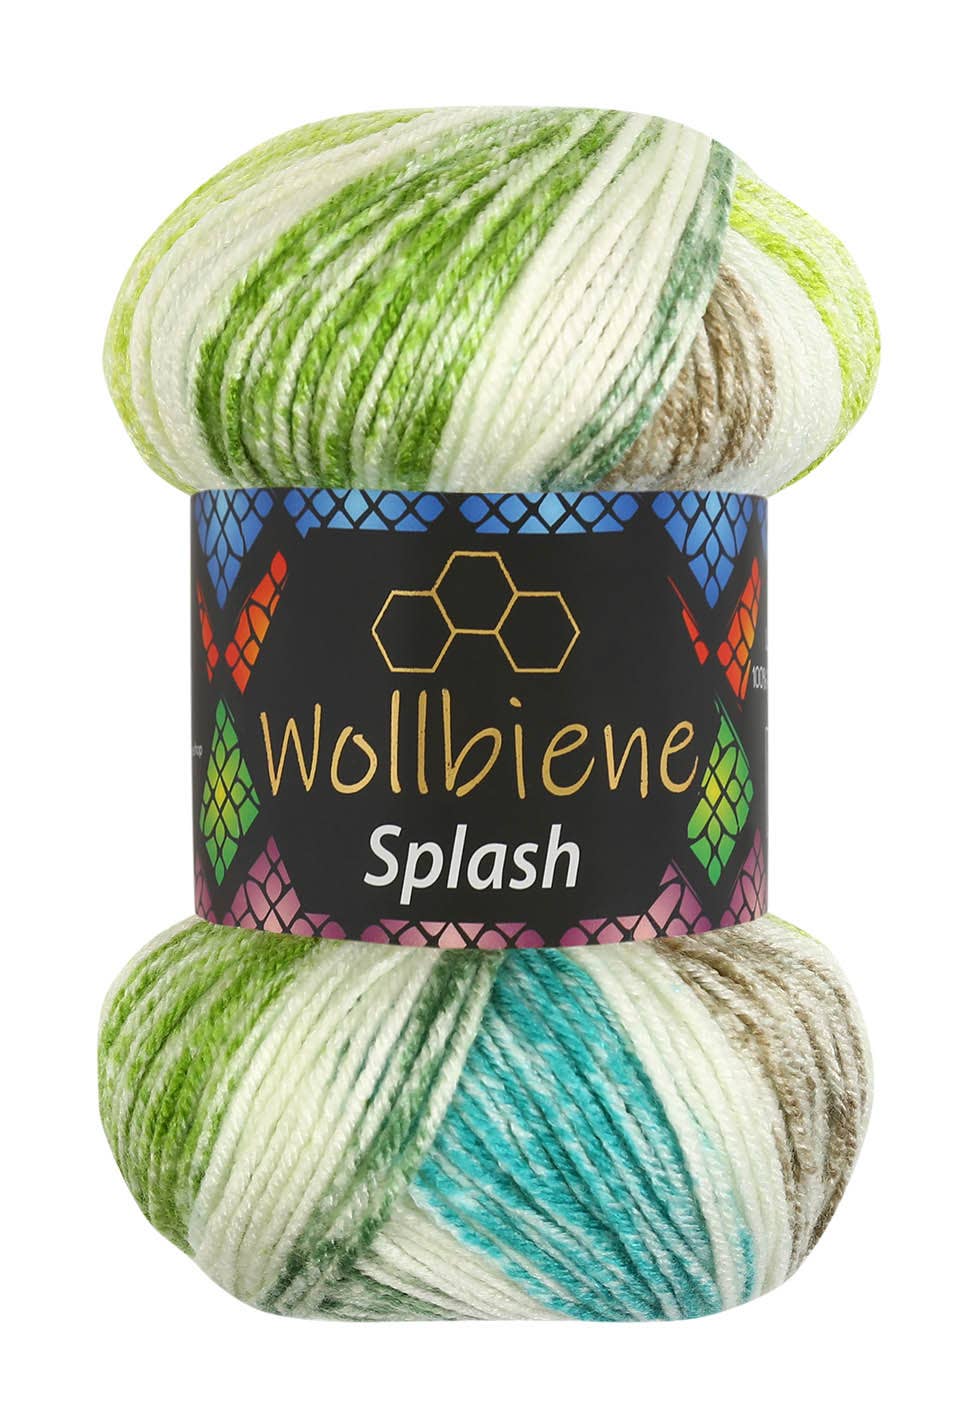 Woolbee splash antipilling wool gradient 100g multicol: 7030 - Strelitzia's Florist & Irish Craft Shop